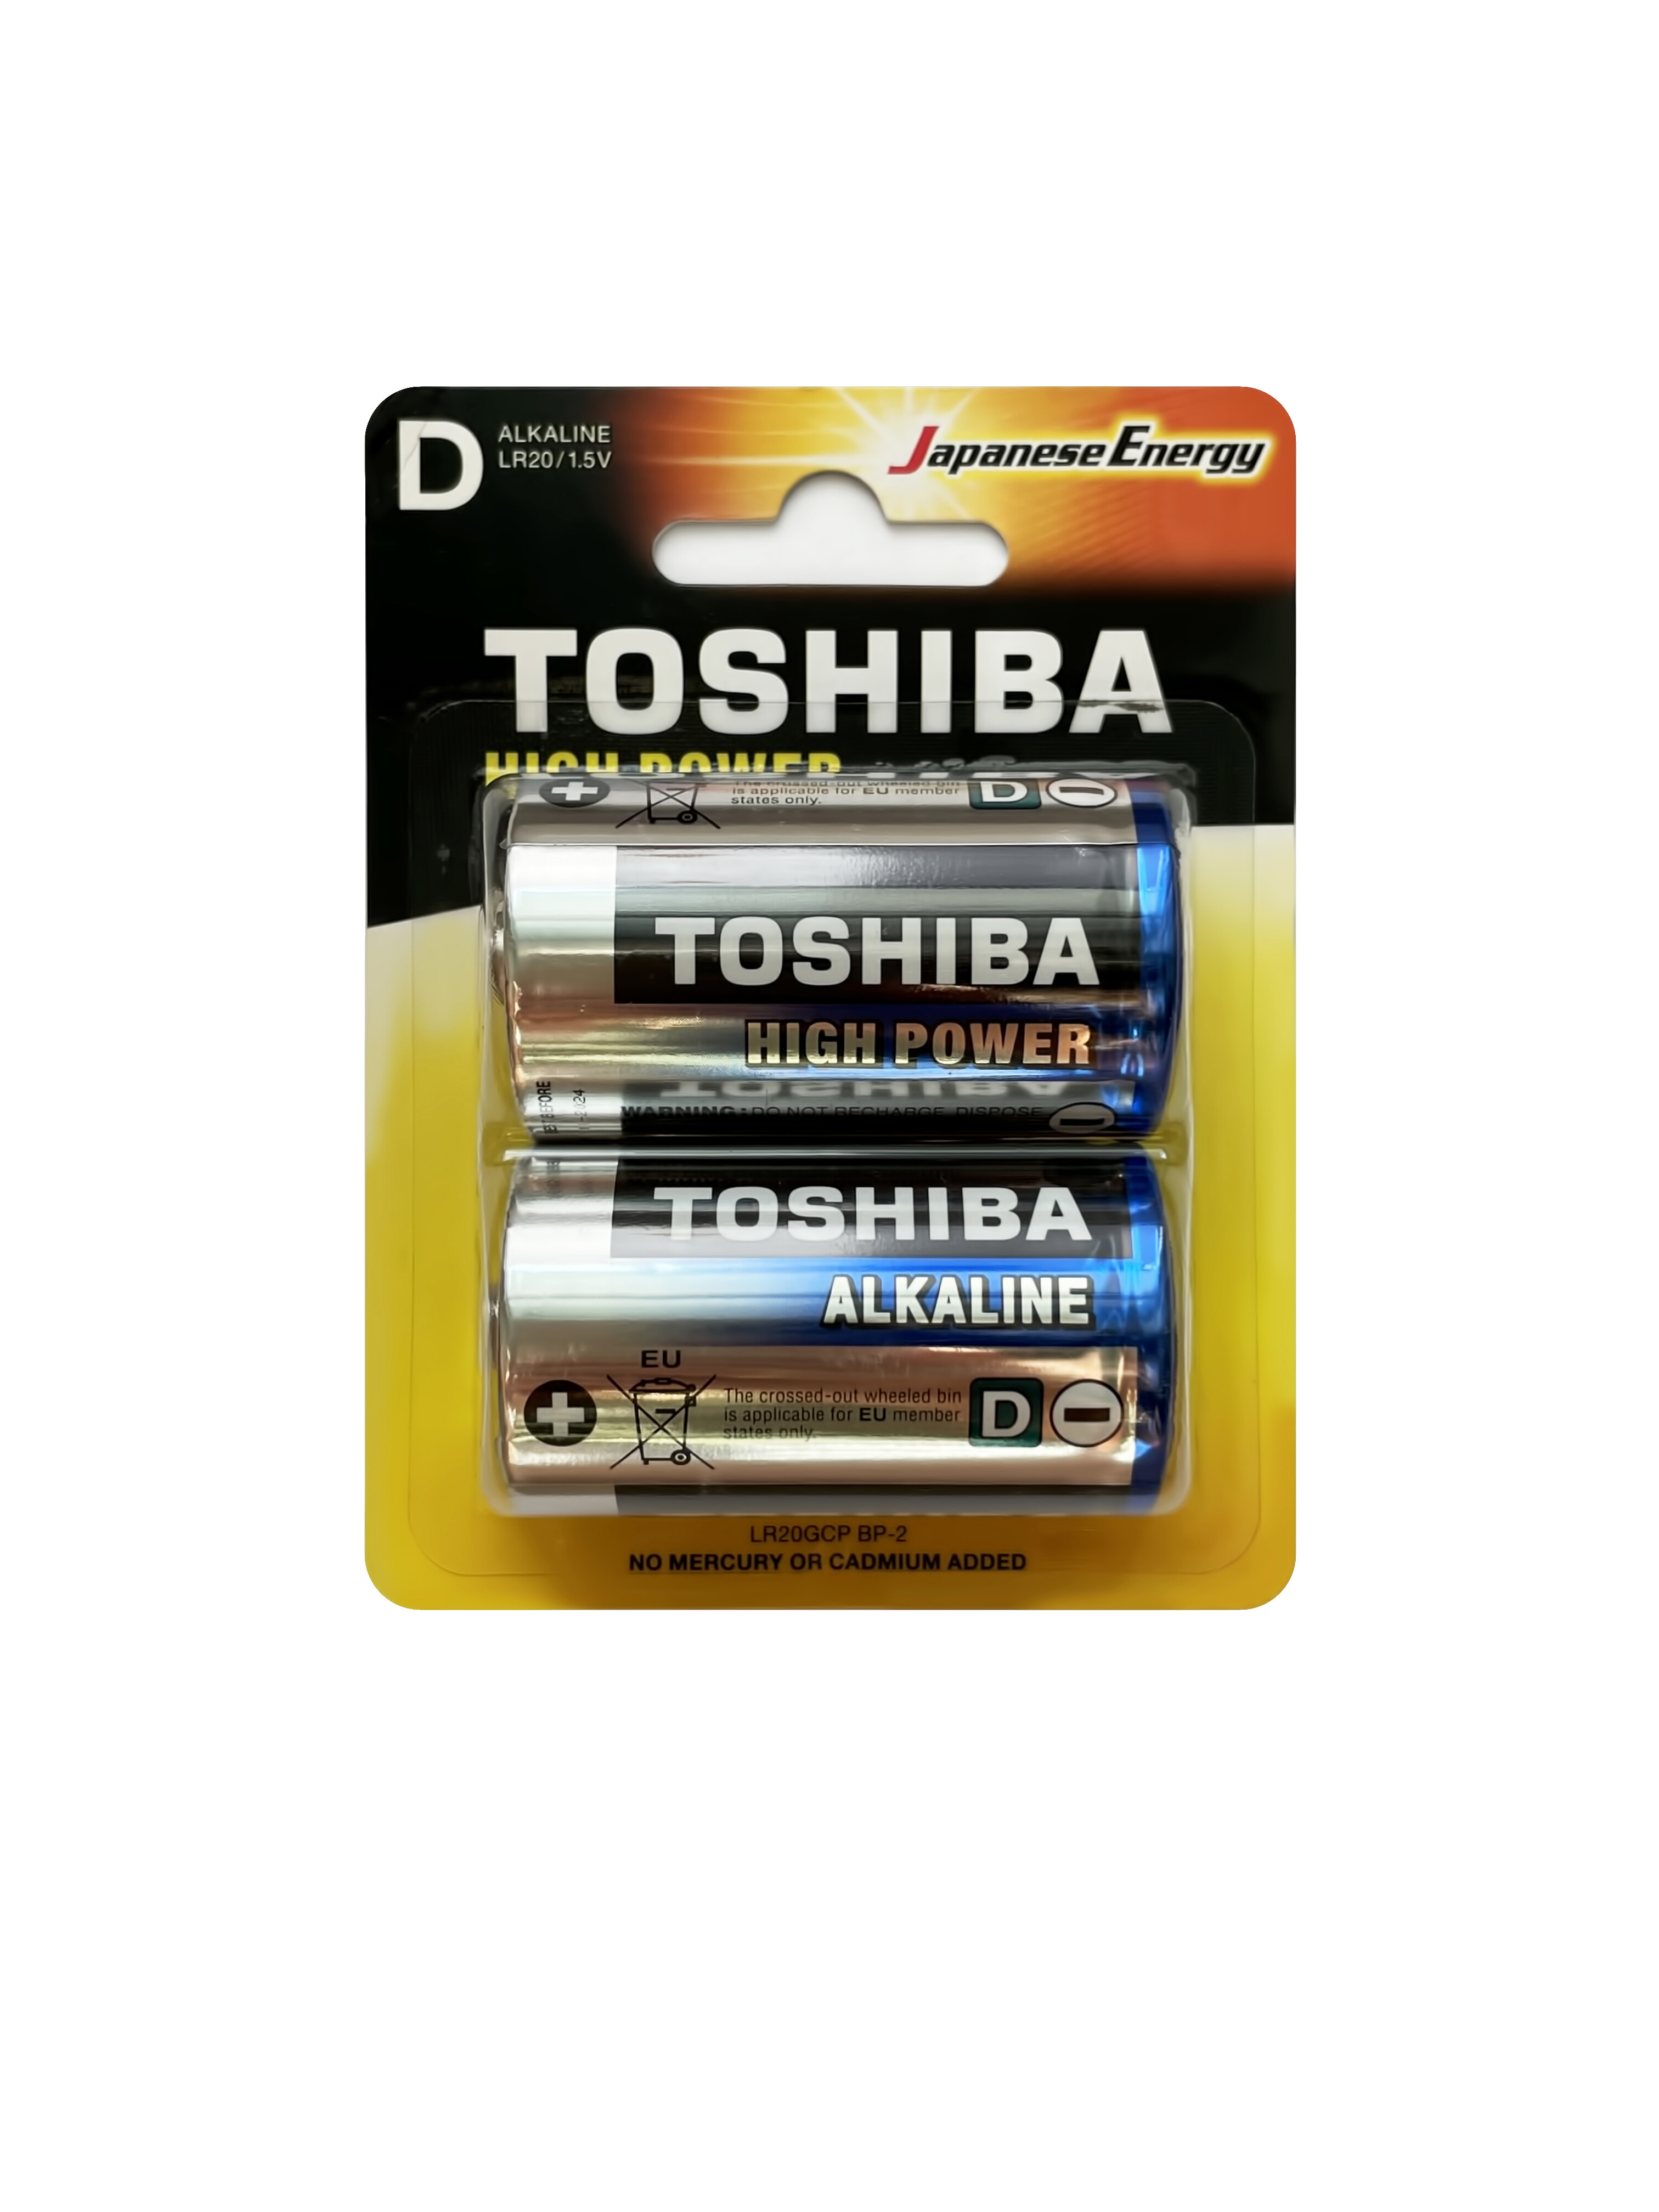 Батарейки Toshiba LR20 щелочные (alkaline) БОЧКА High Power (2шт) D 1,5V батарейки duracell lr6 2bl ultra power 2 шт б0038759